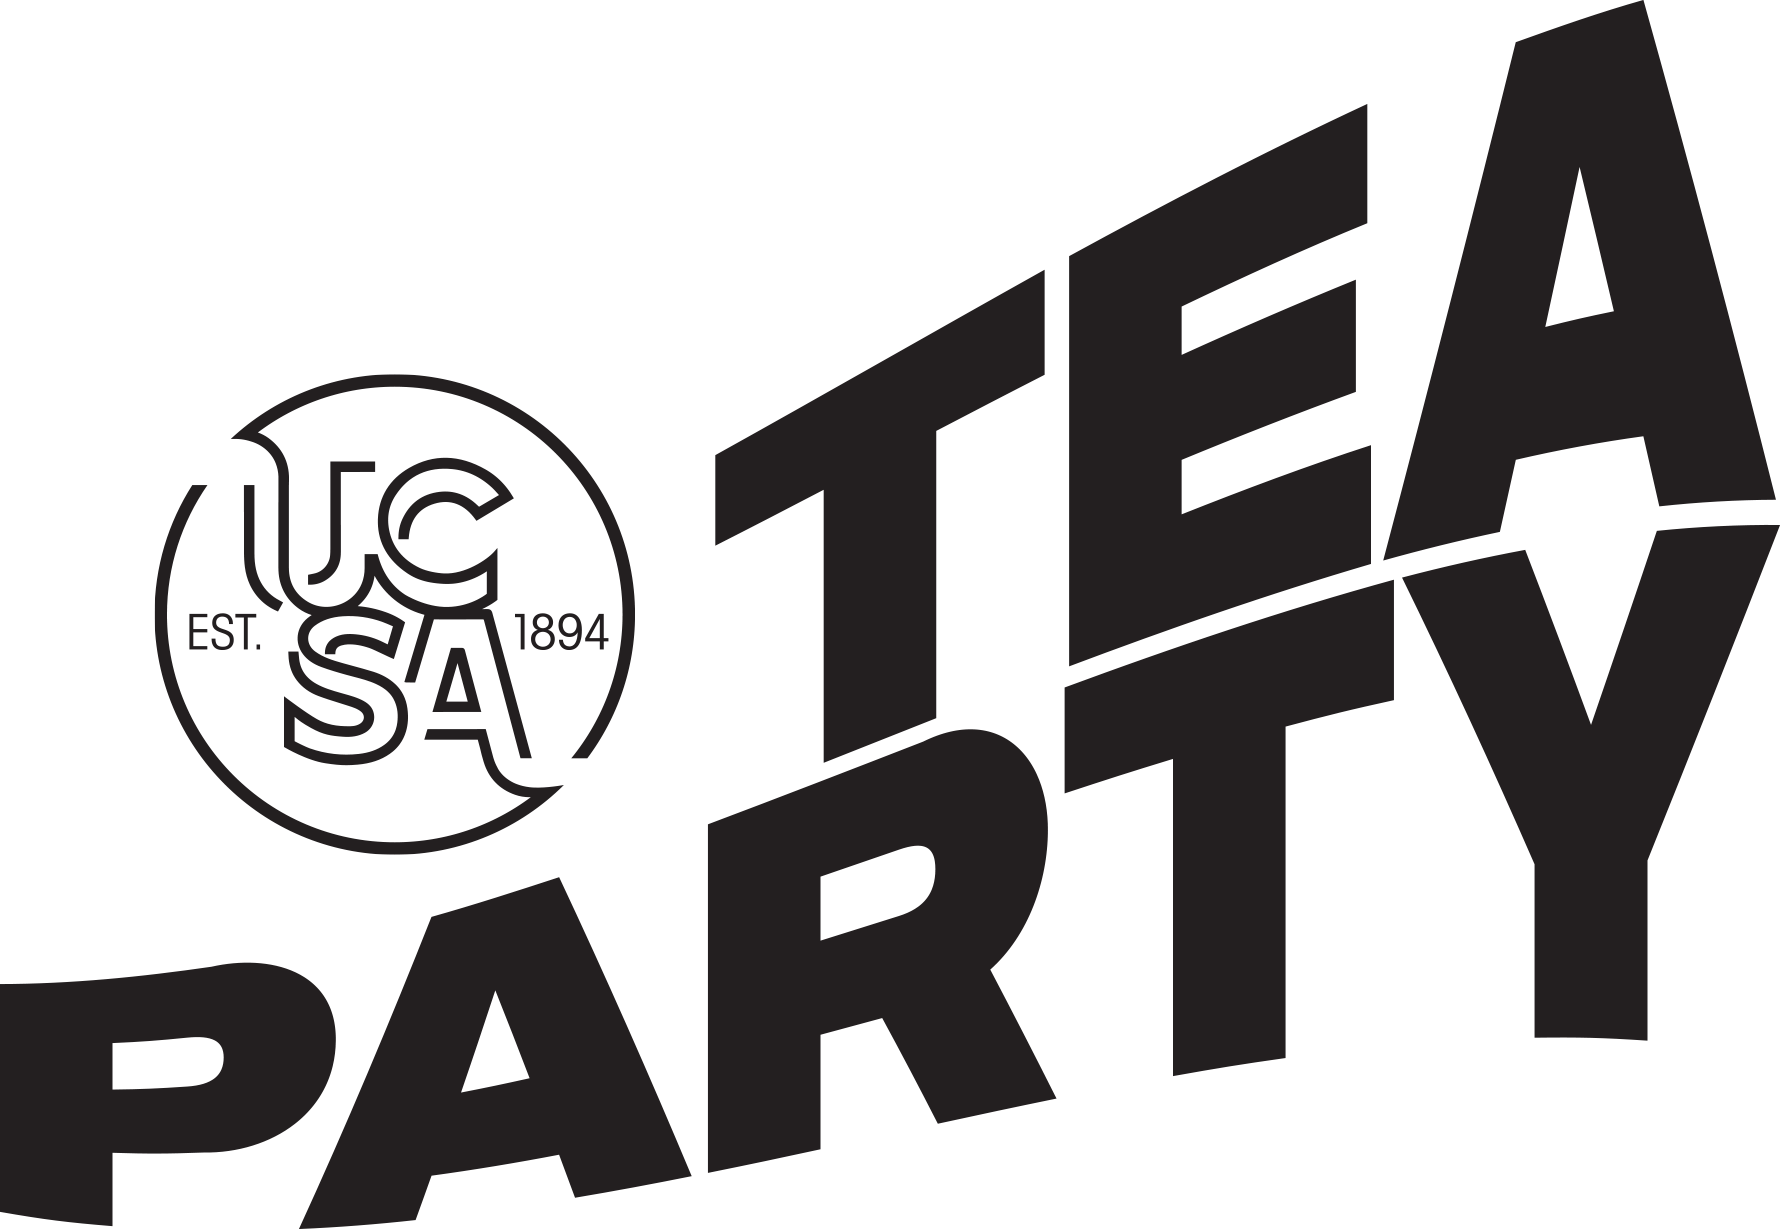 Tea Party 2021!